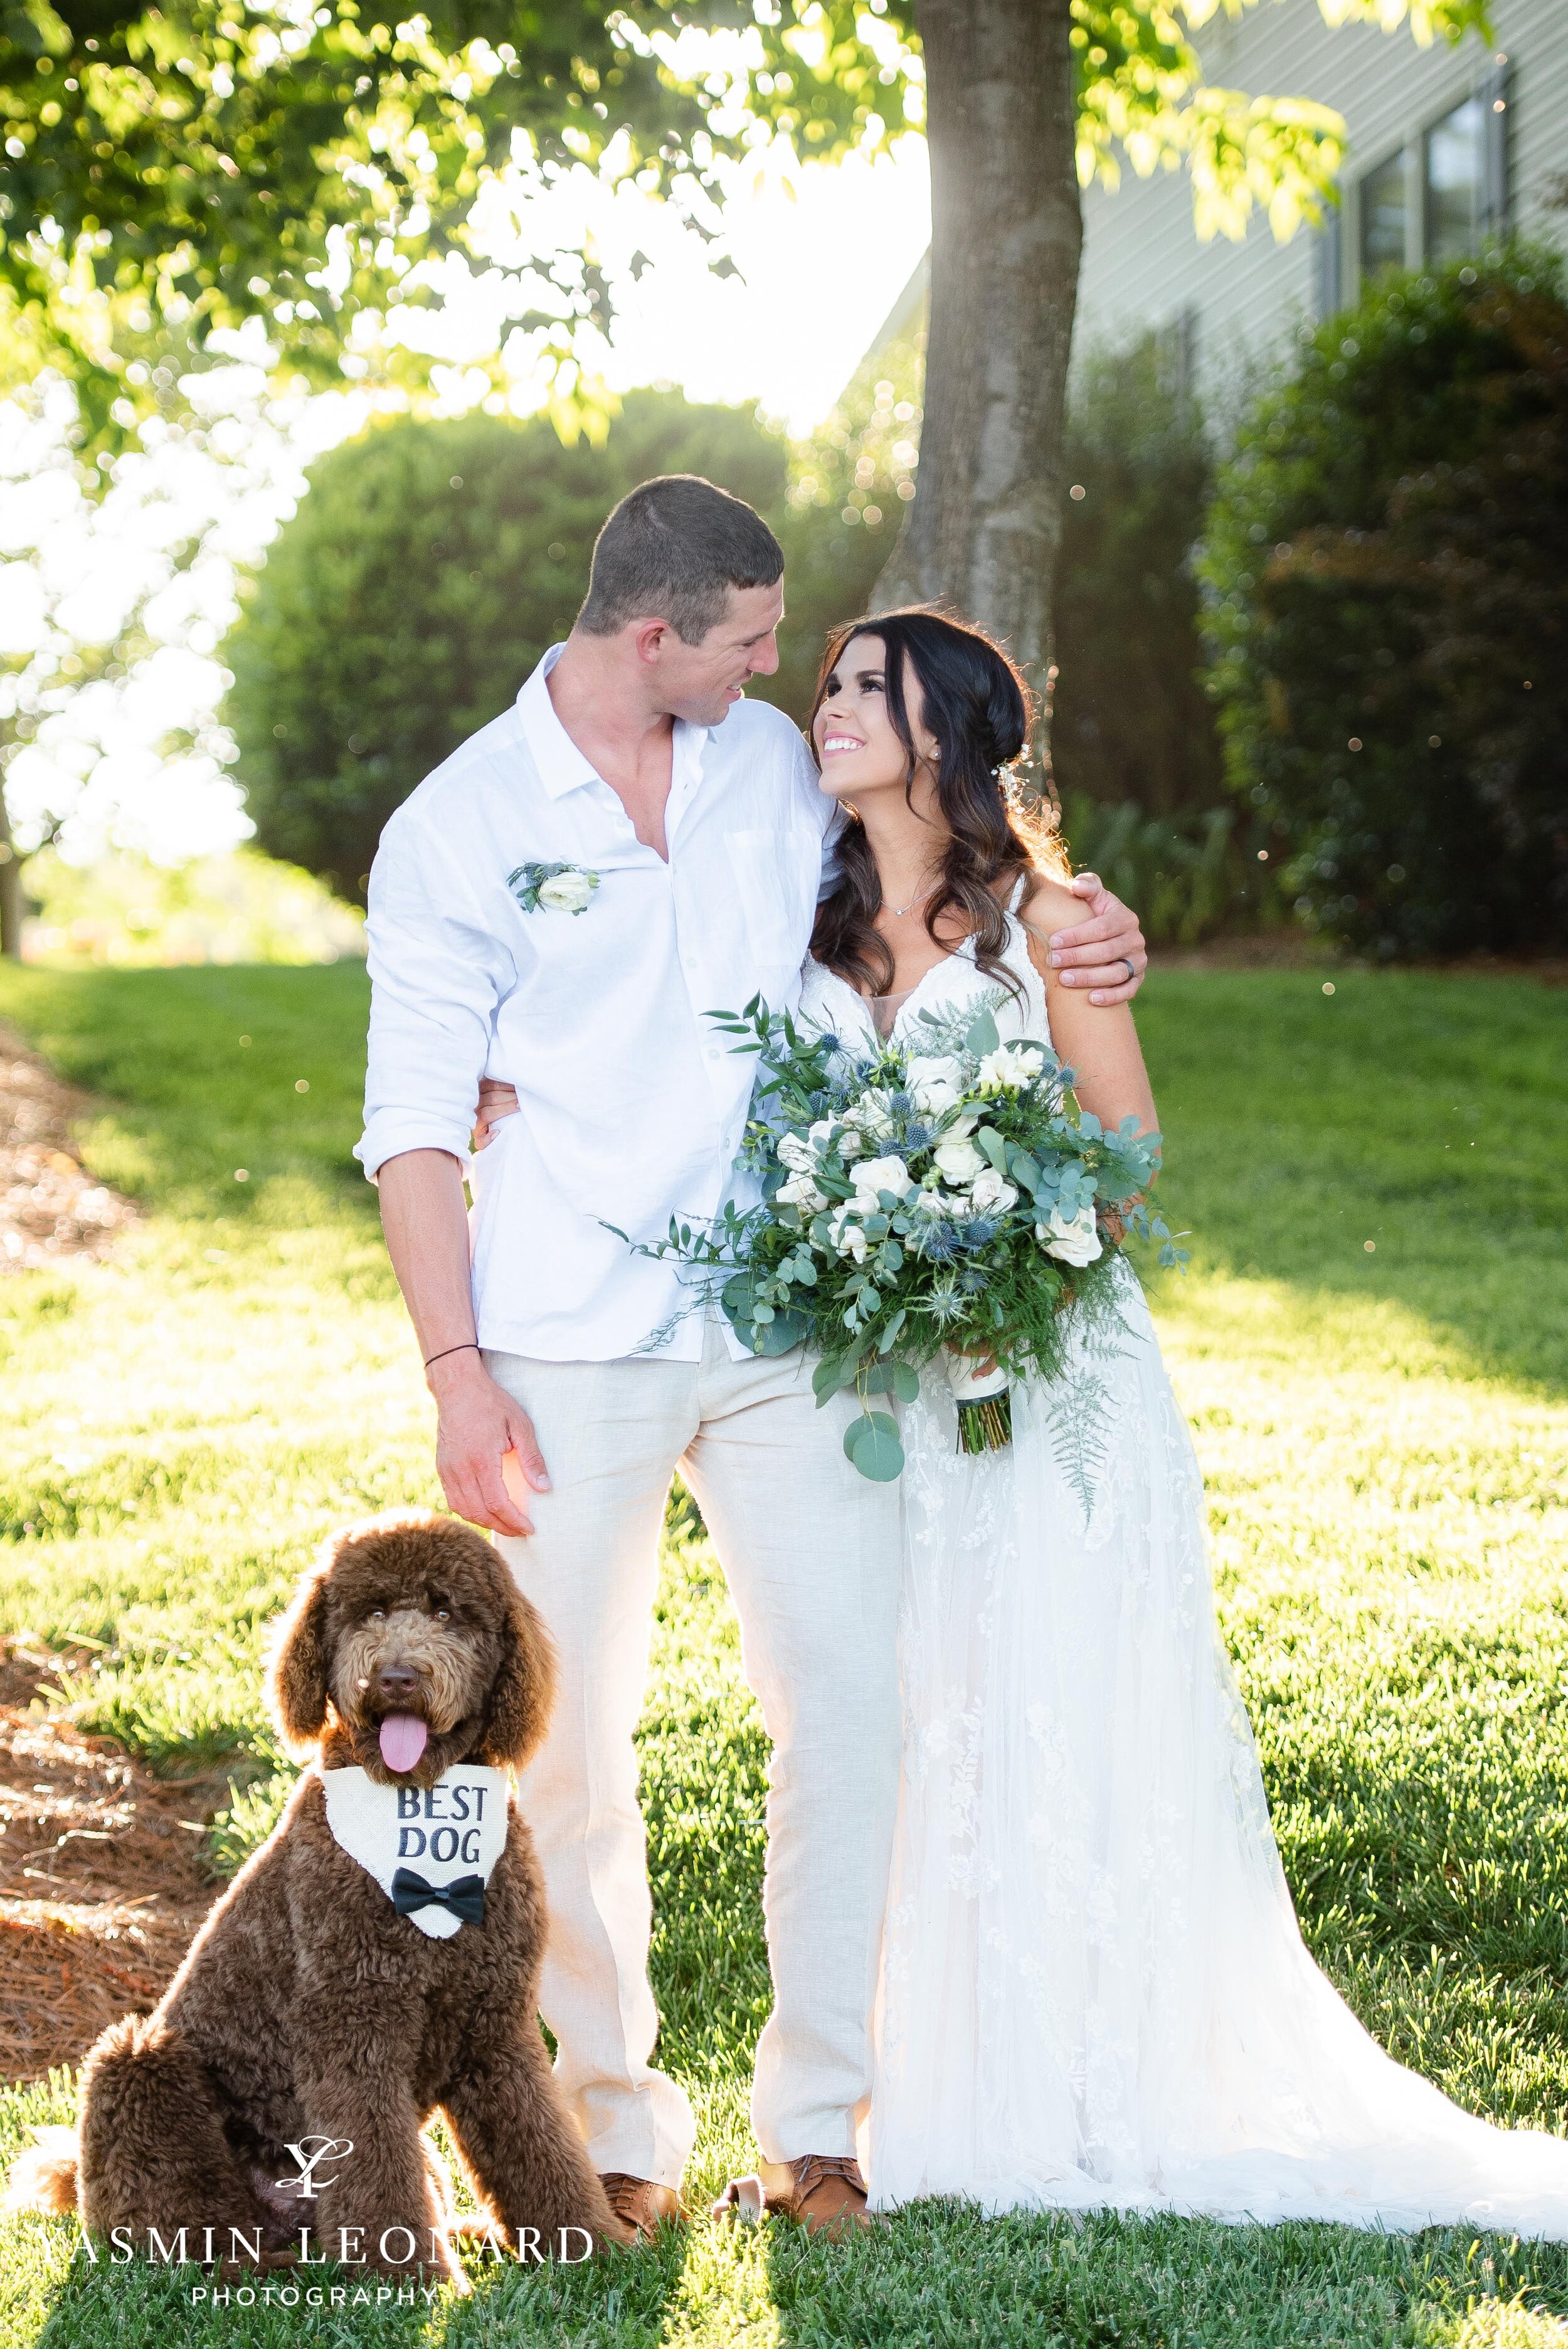 Lakeside Wedding - Intimate Ceremony - Small Wedding - Private Wedding - Best Man Dog - Best Dog - Just Priceless - Yasmin Leonard Photography - High Point Wedding Photographer - High Rock Lake Wedding-34.jpg